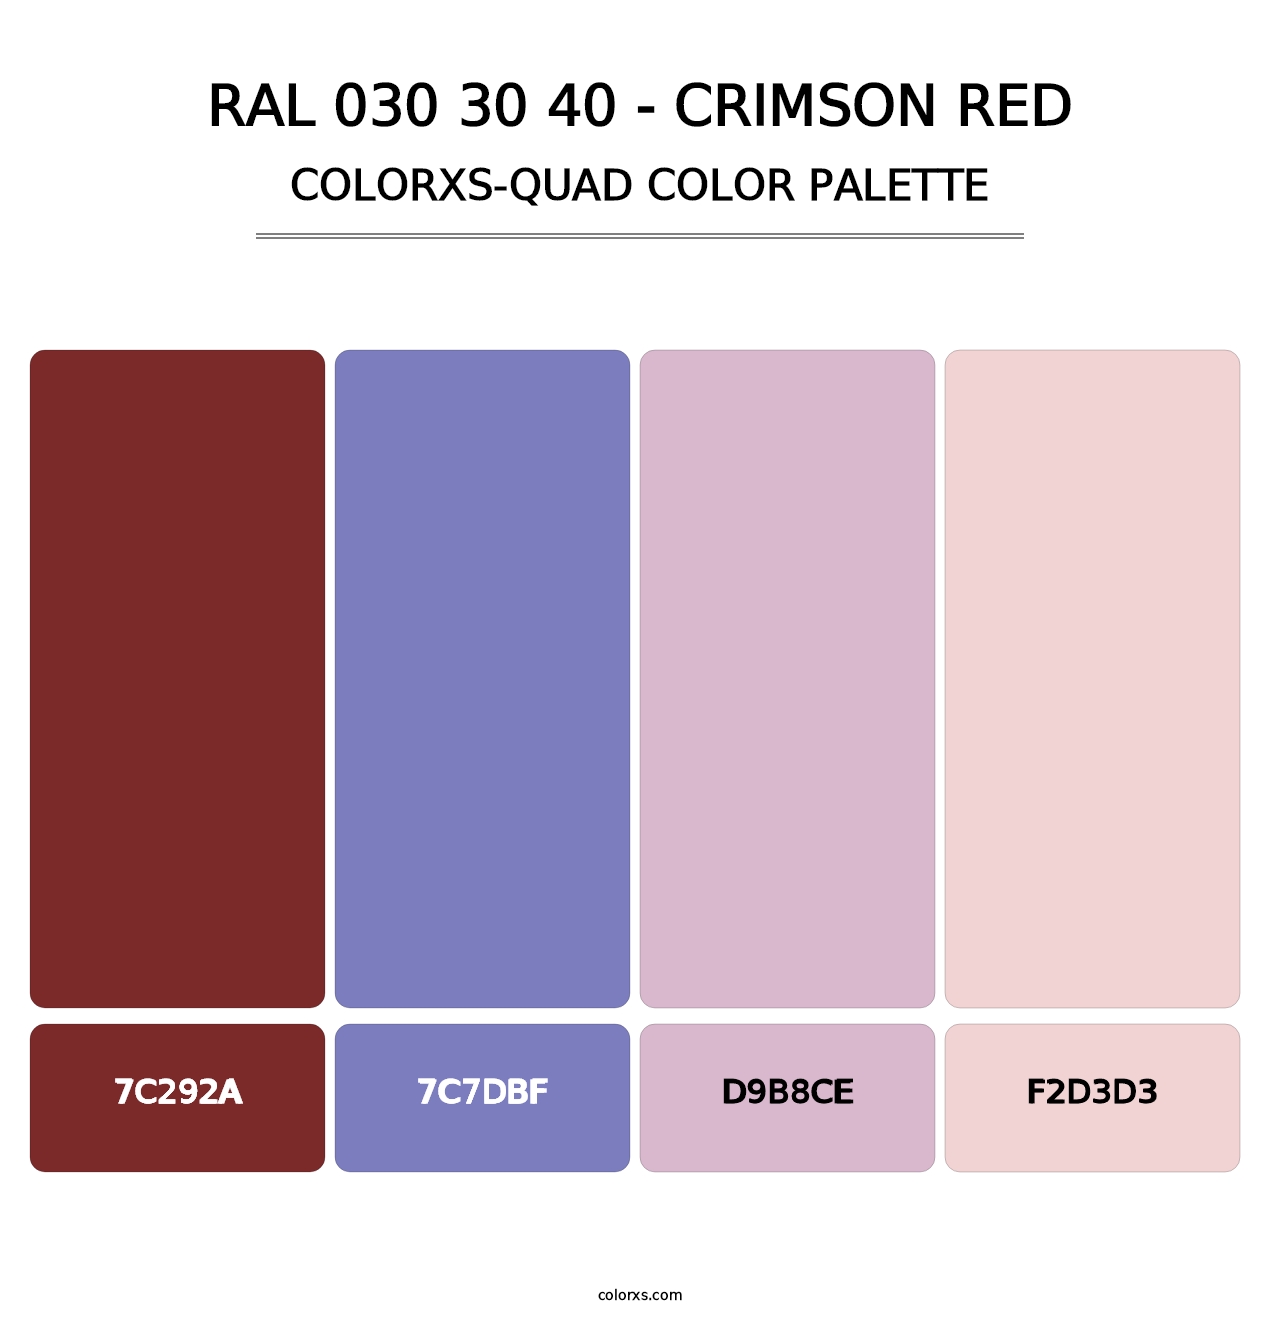 RAL 030 30 40 - Crimson Red - Colorxs Quad Palette